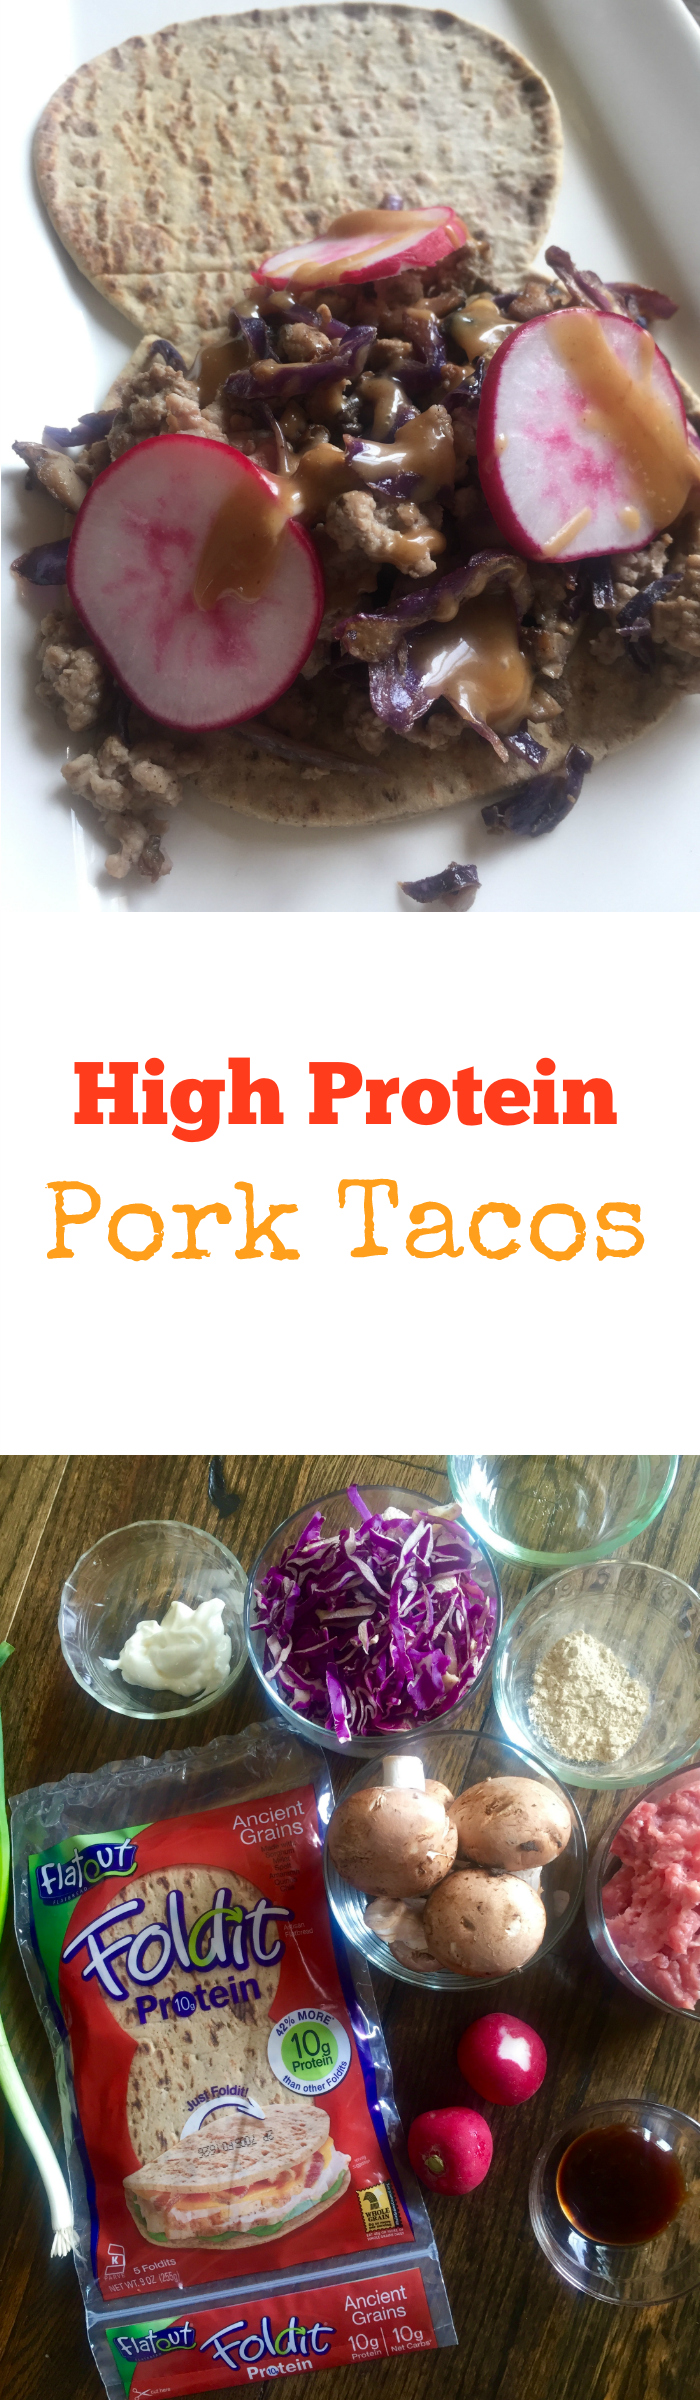 High Protein Pork Tacos